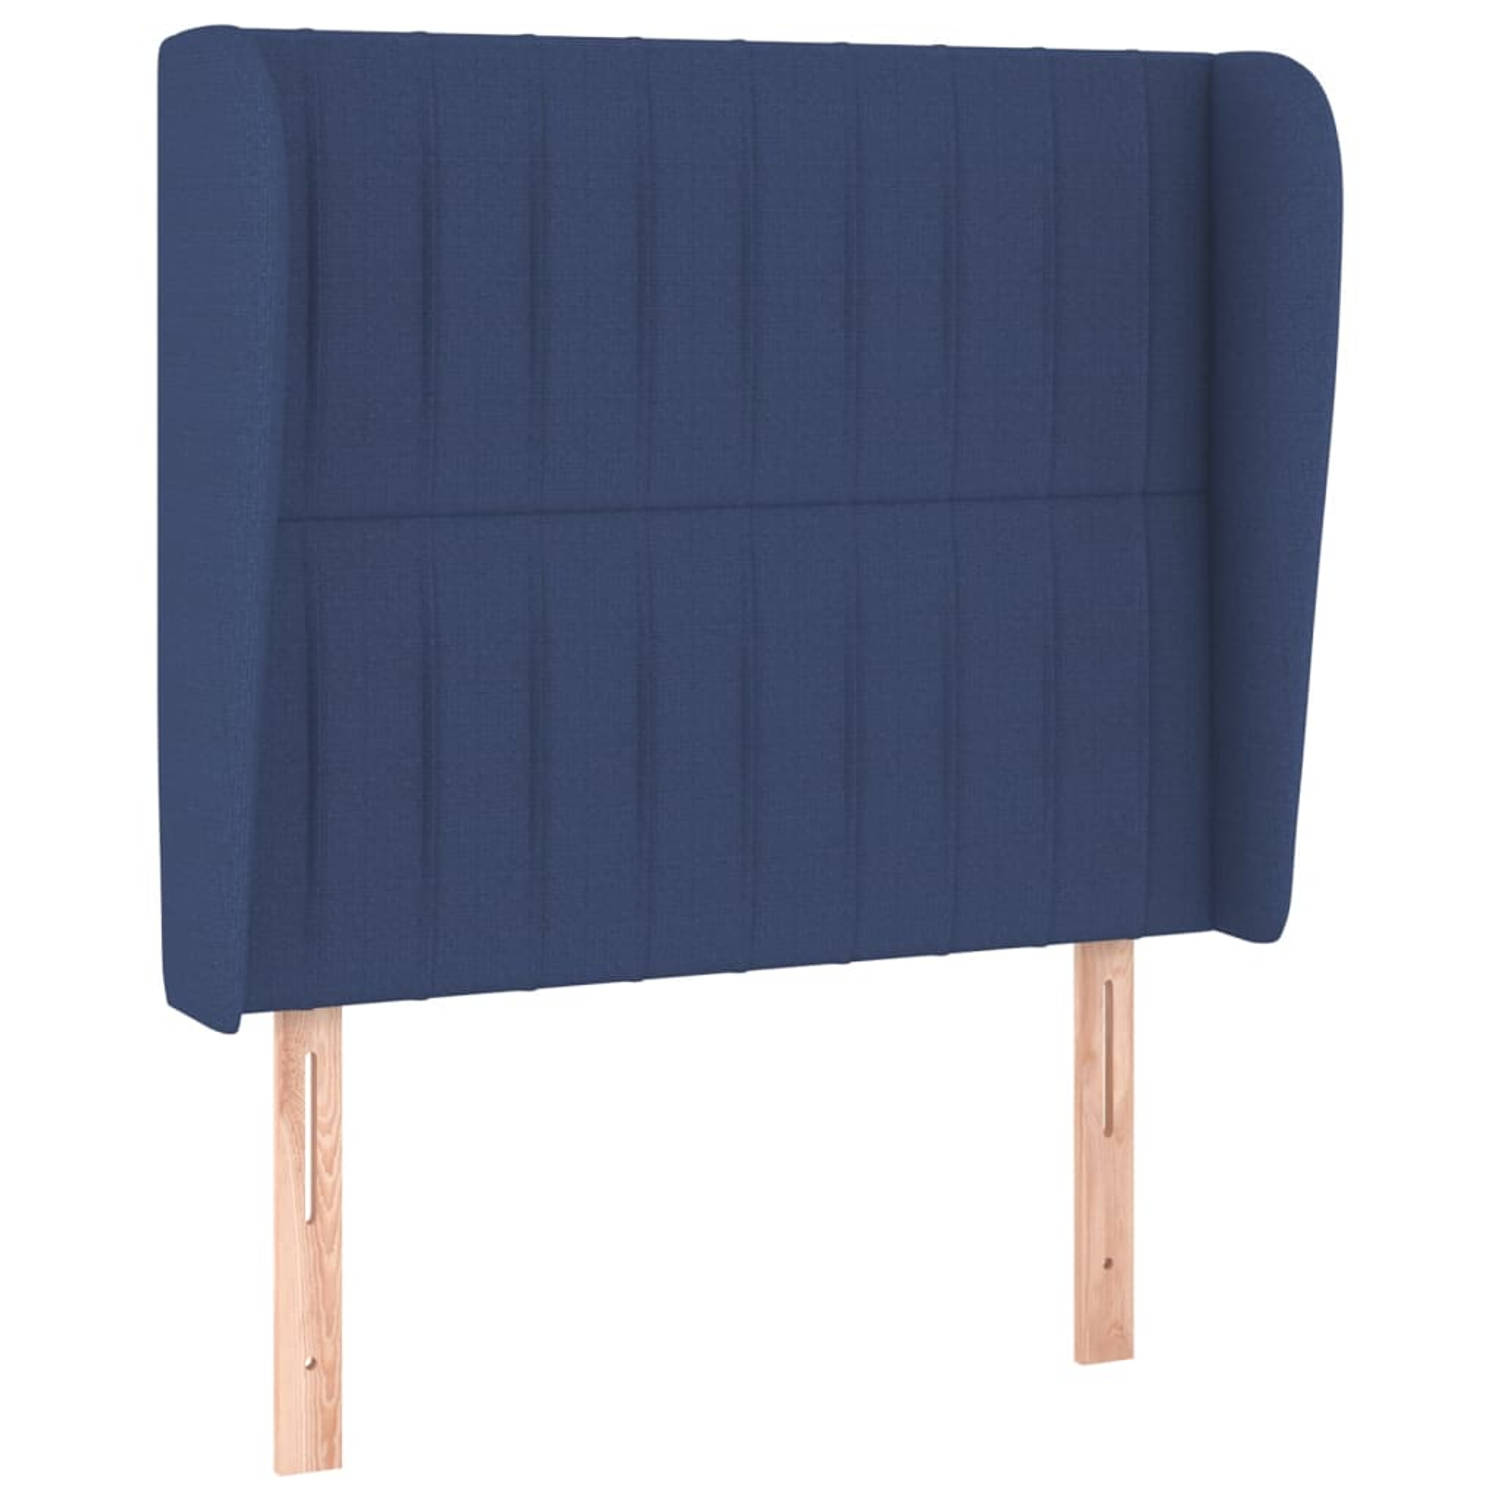 The Living Store Hoofdbord - Trendy ontwerp - Complete uitstraling - Duurzaam materiaal - Stevige poten - Verstelbare hoogte - Comfortabele ondersteuning - Kleur- blauw - Materiaal